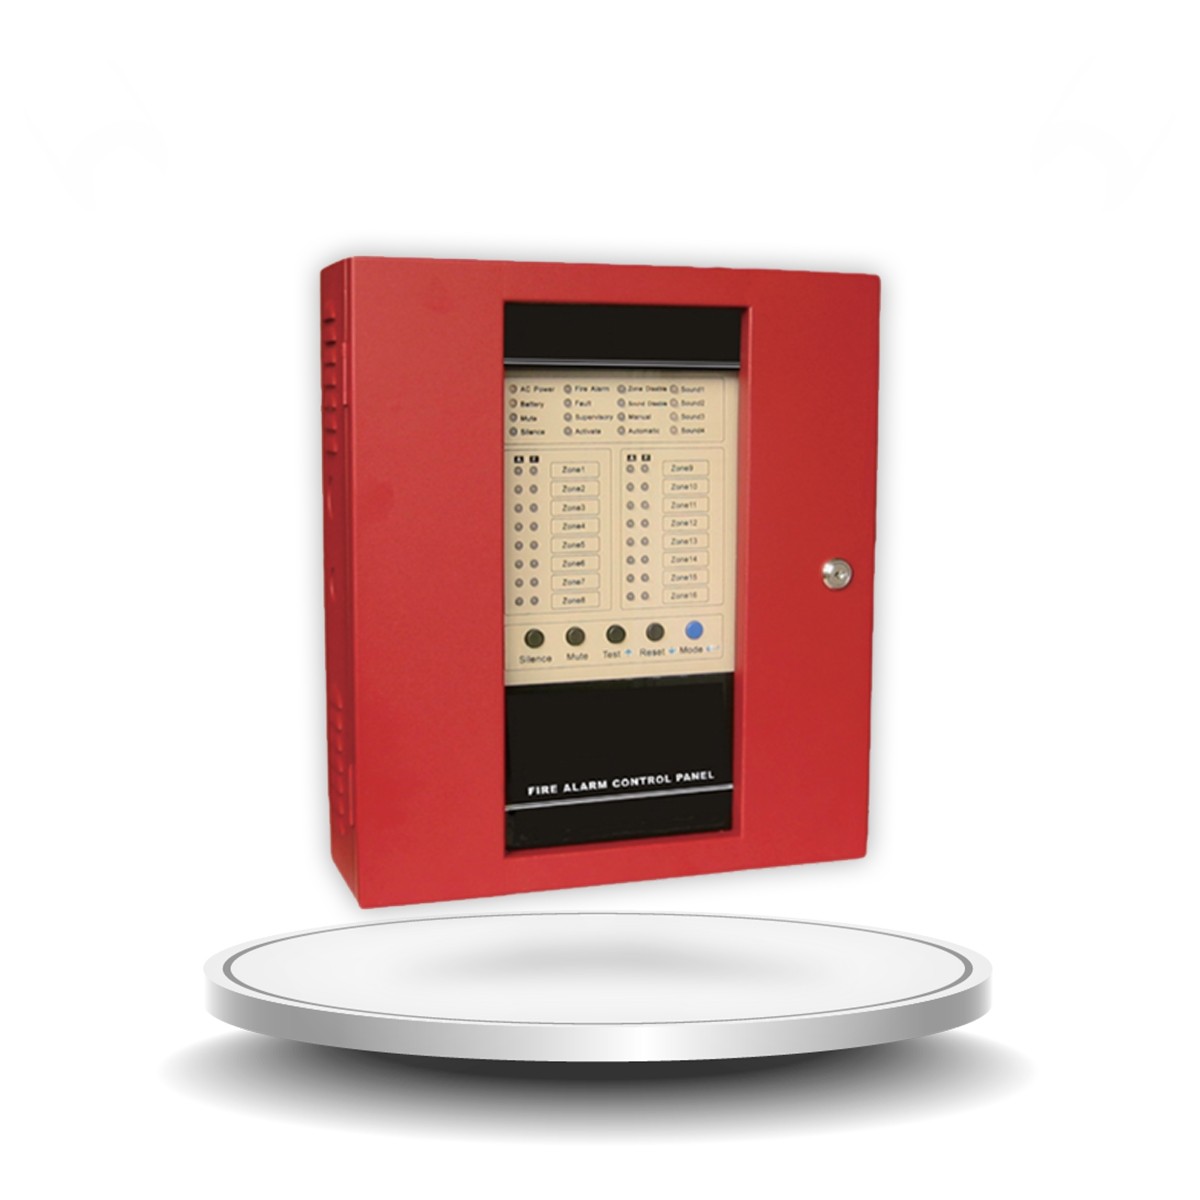 Fire Alarm Control Panel YJ-1004/YJ-1008/YJ-1016 series 